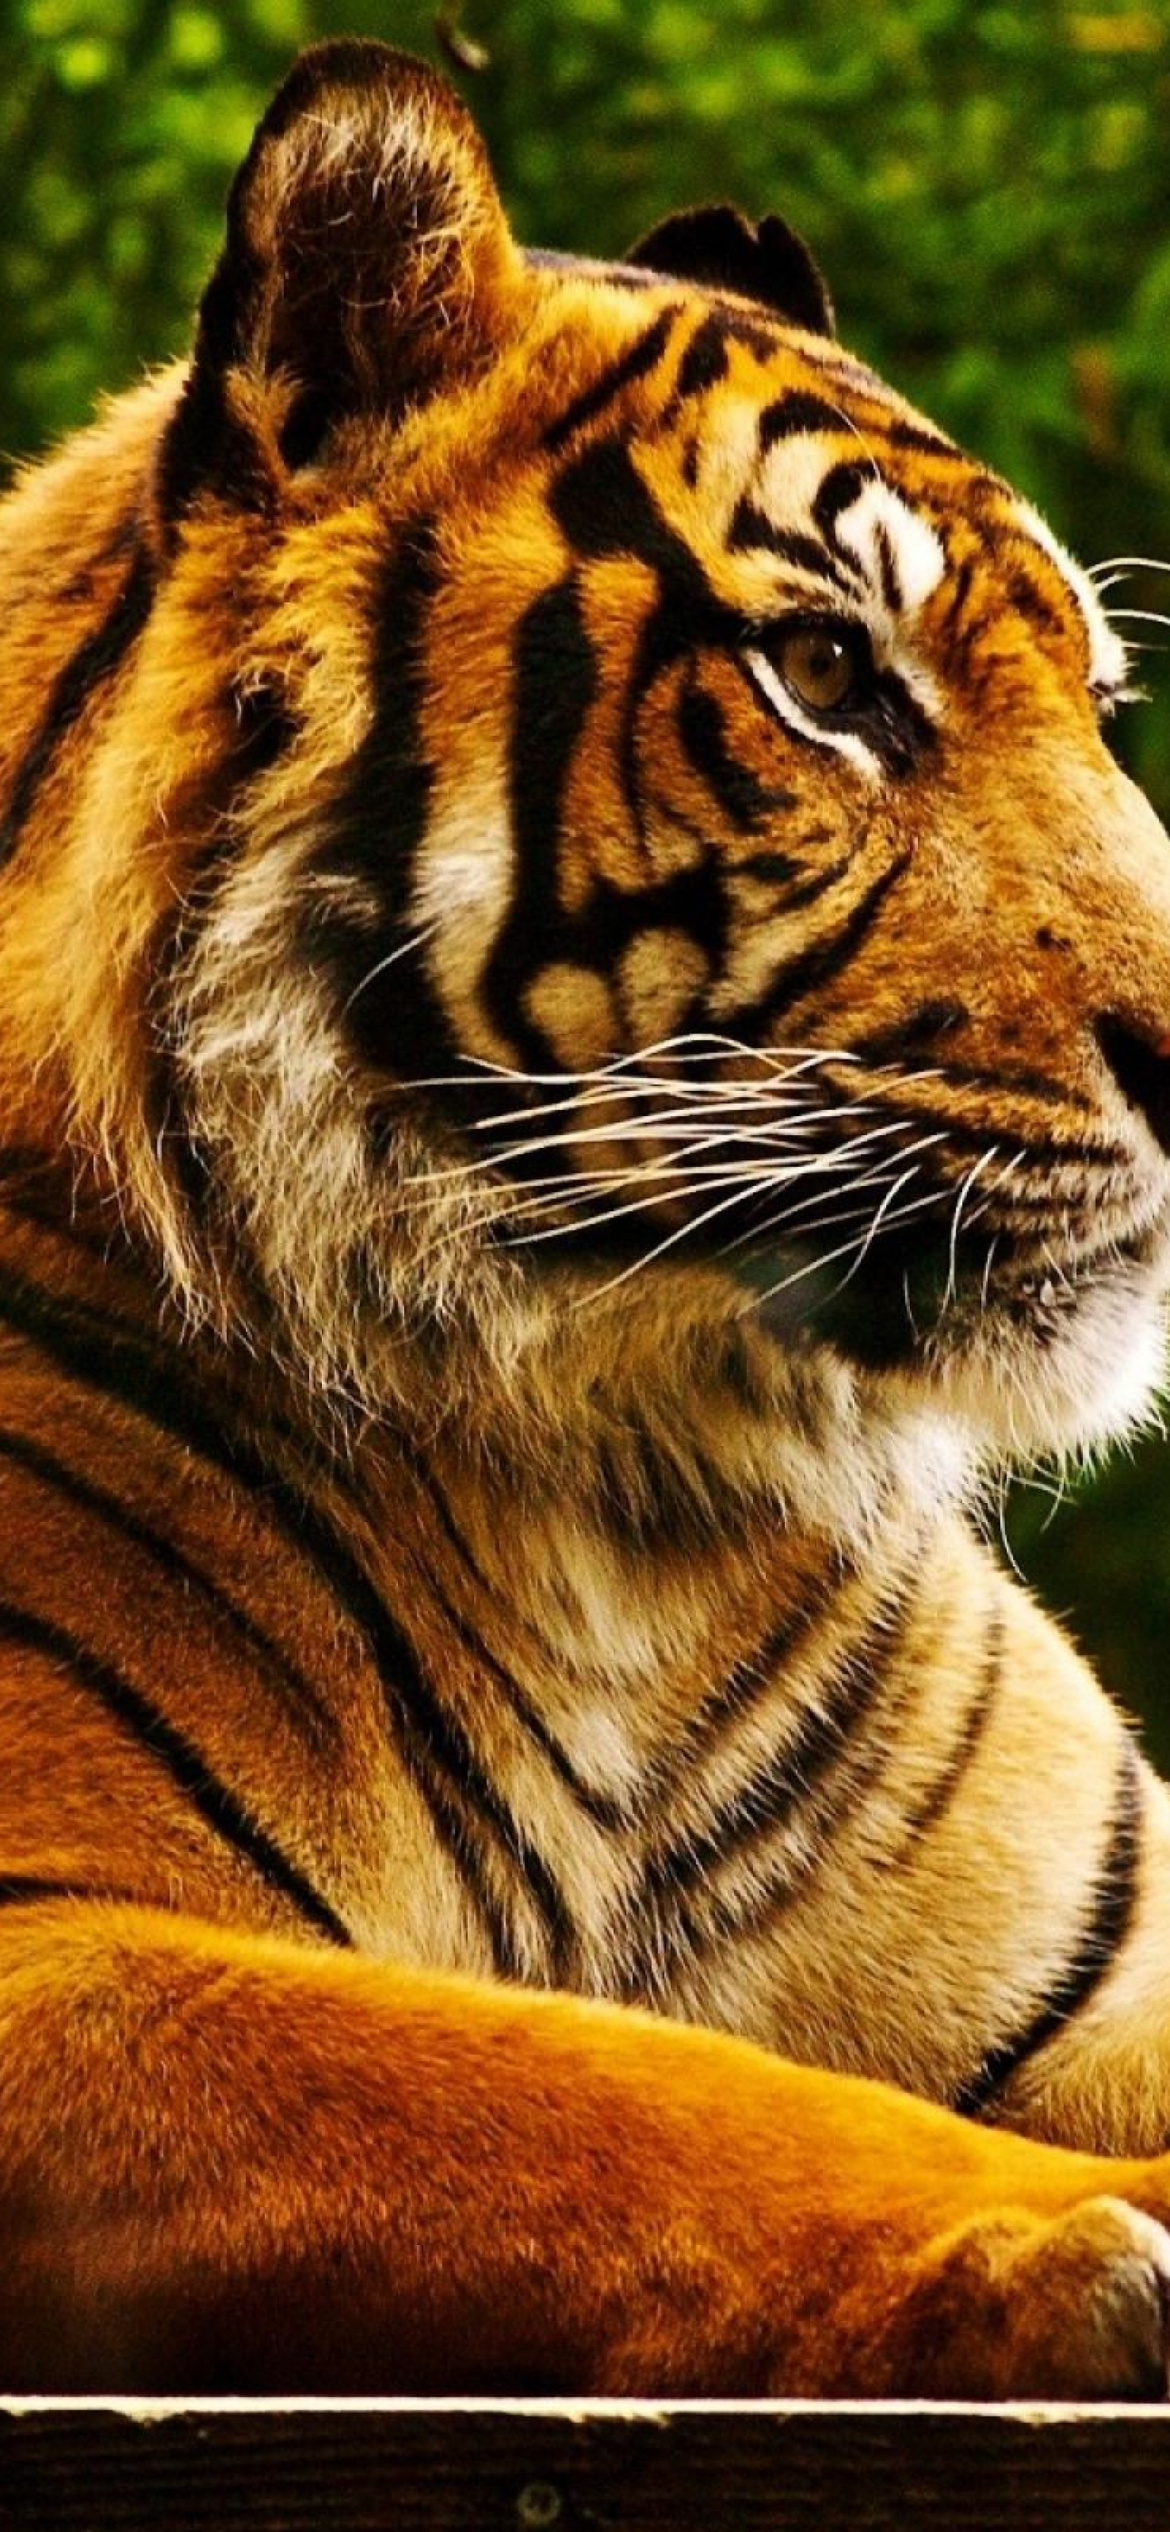 Royal Bengal Tiger wallpaper 1170x2532